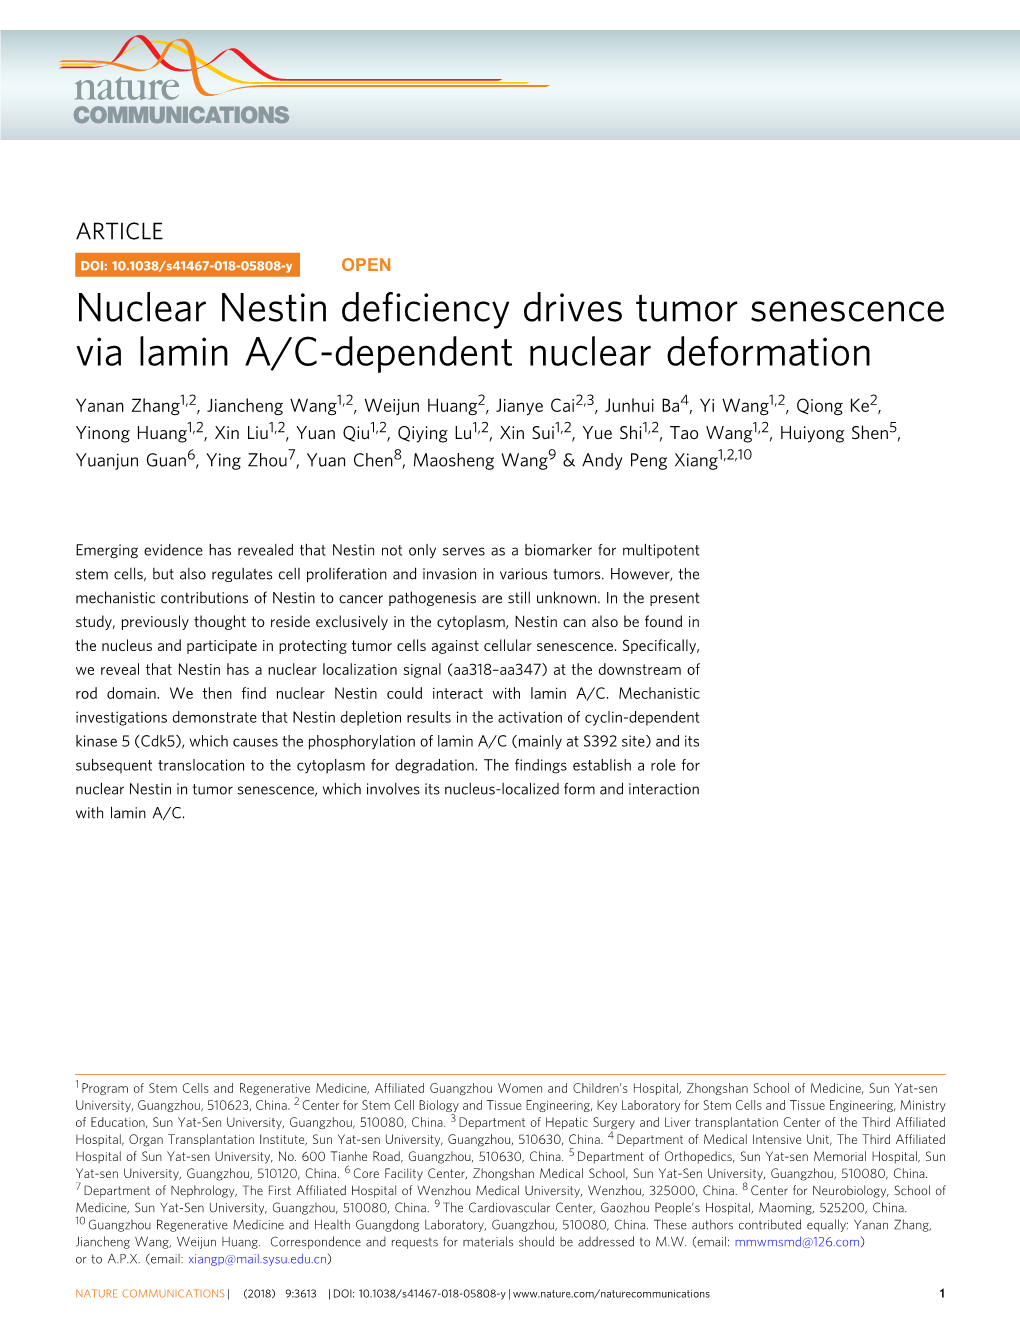 Nuclear Nestin Deficiency Drives Tumor Senescence Via Lamin A/C